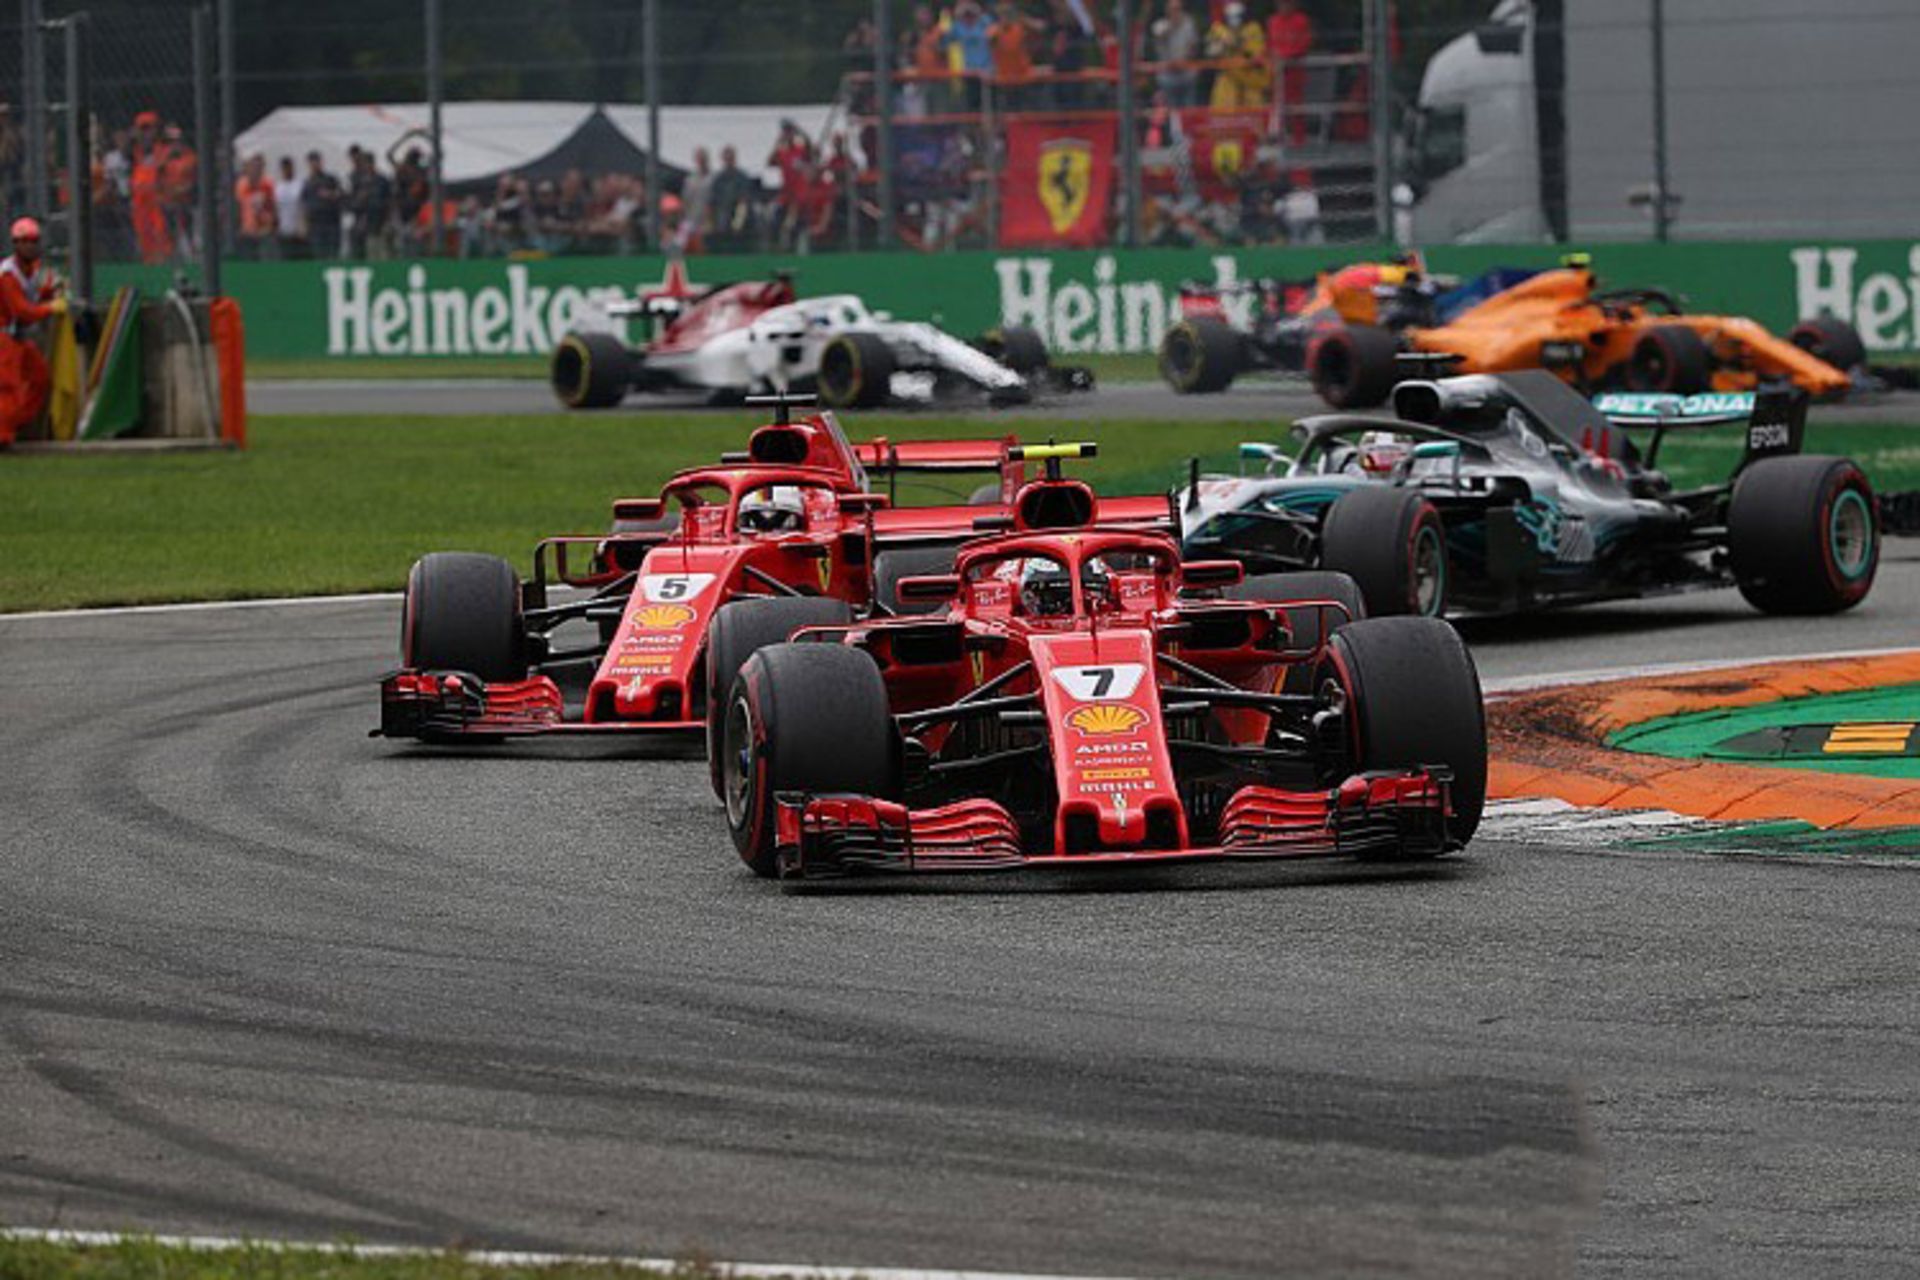 Singapore Formula 1 Grand Prix 2018 / گرندپری فرمول یک سنگاپور 2018